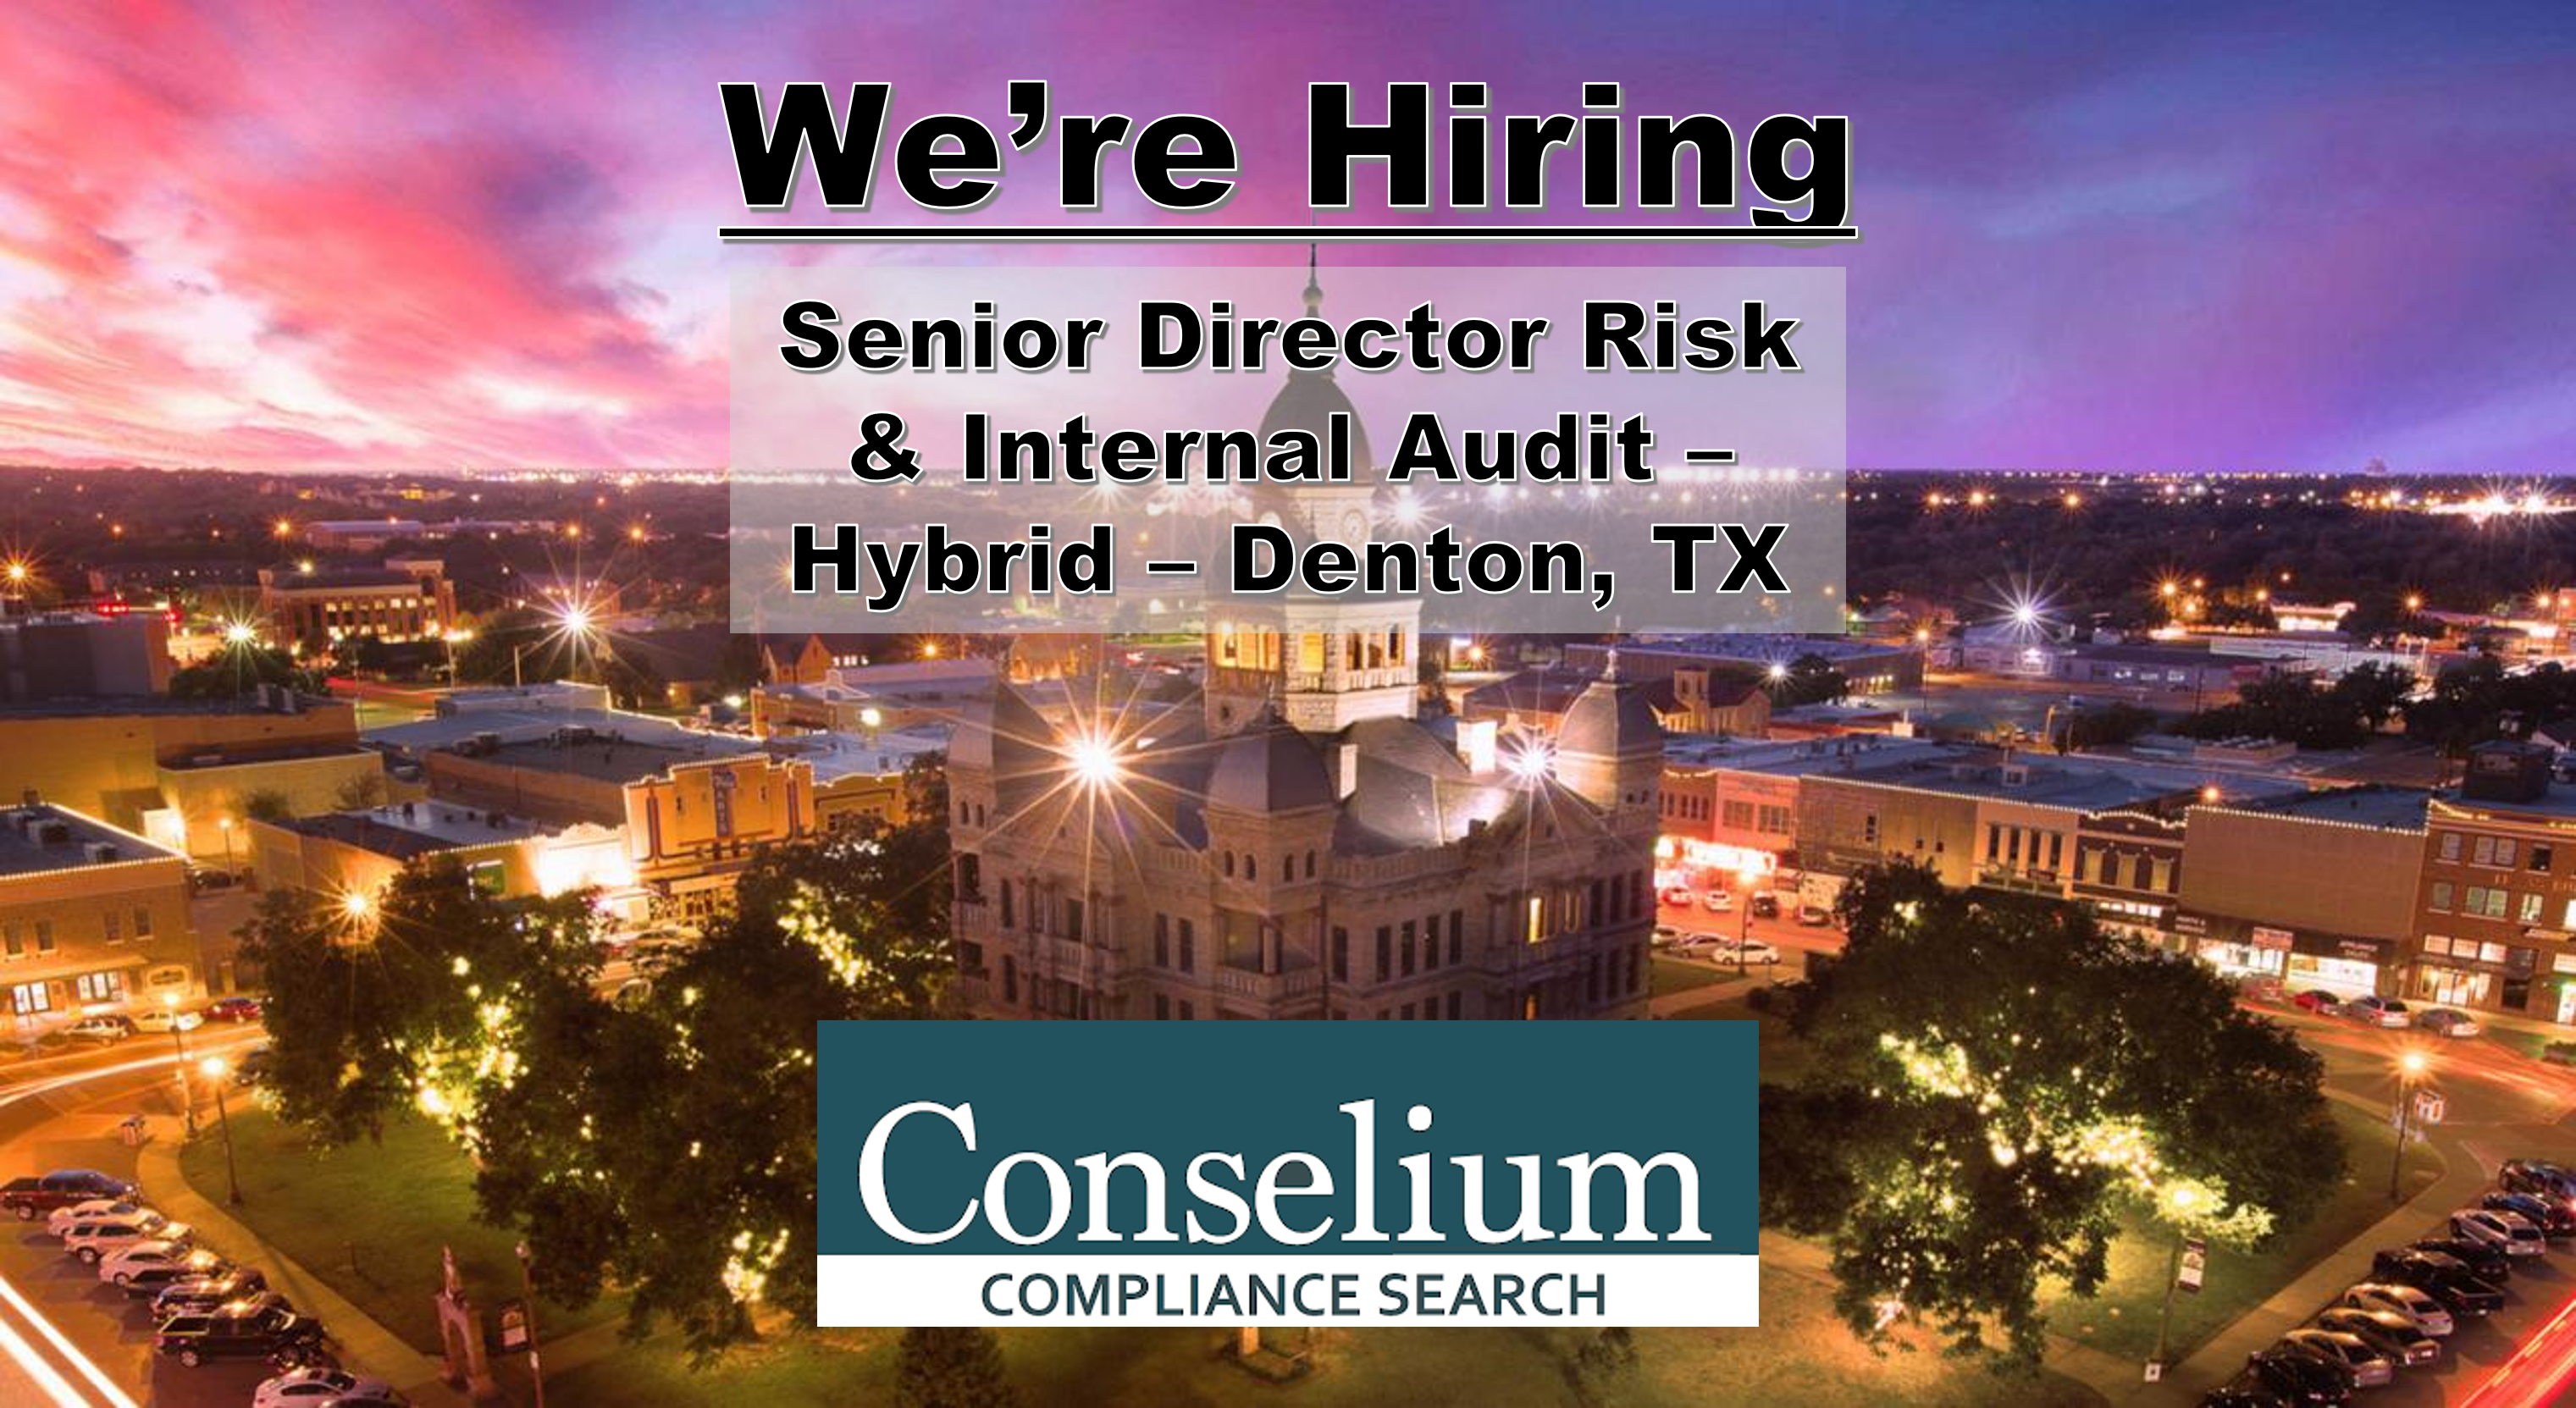 Senior Director Risk & Internal Audit, Denton, TX (Hybrid)